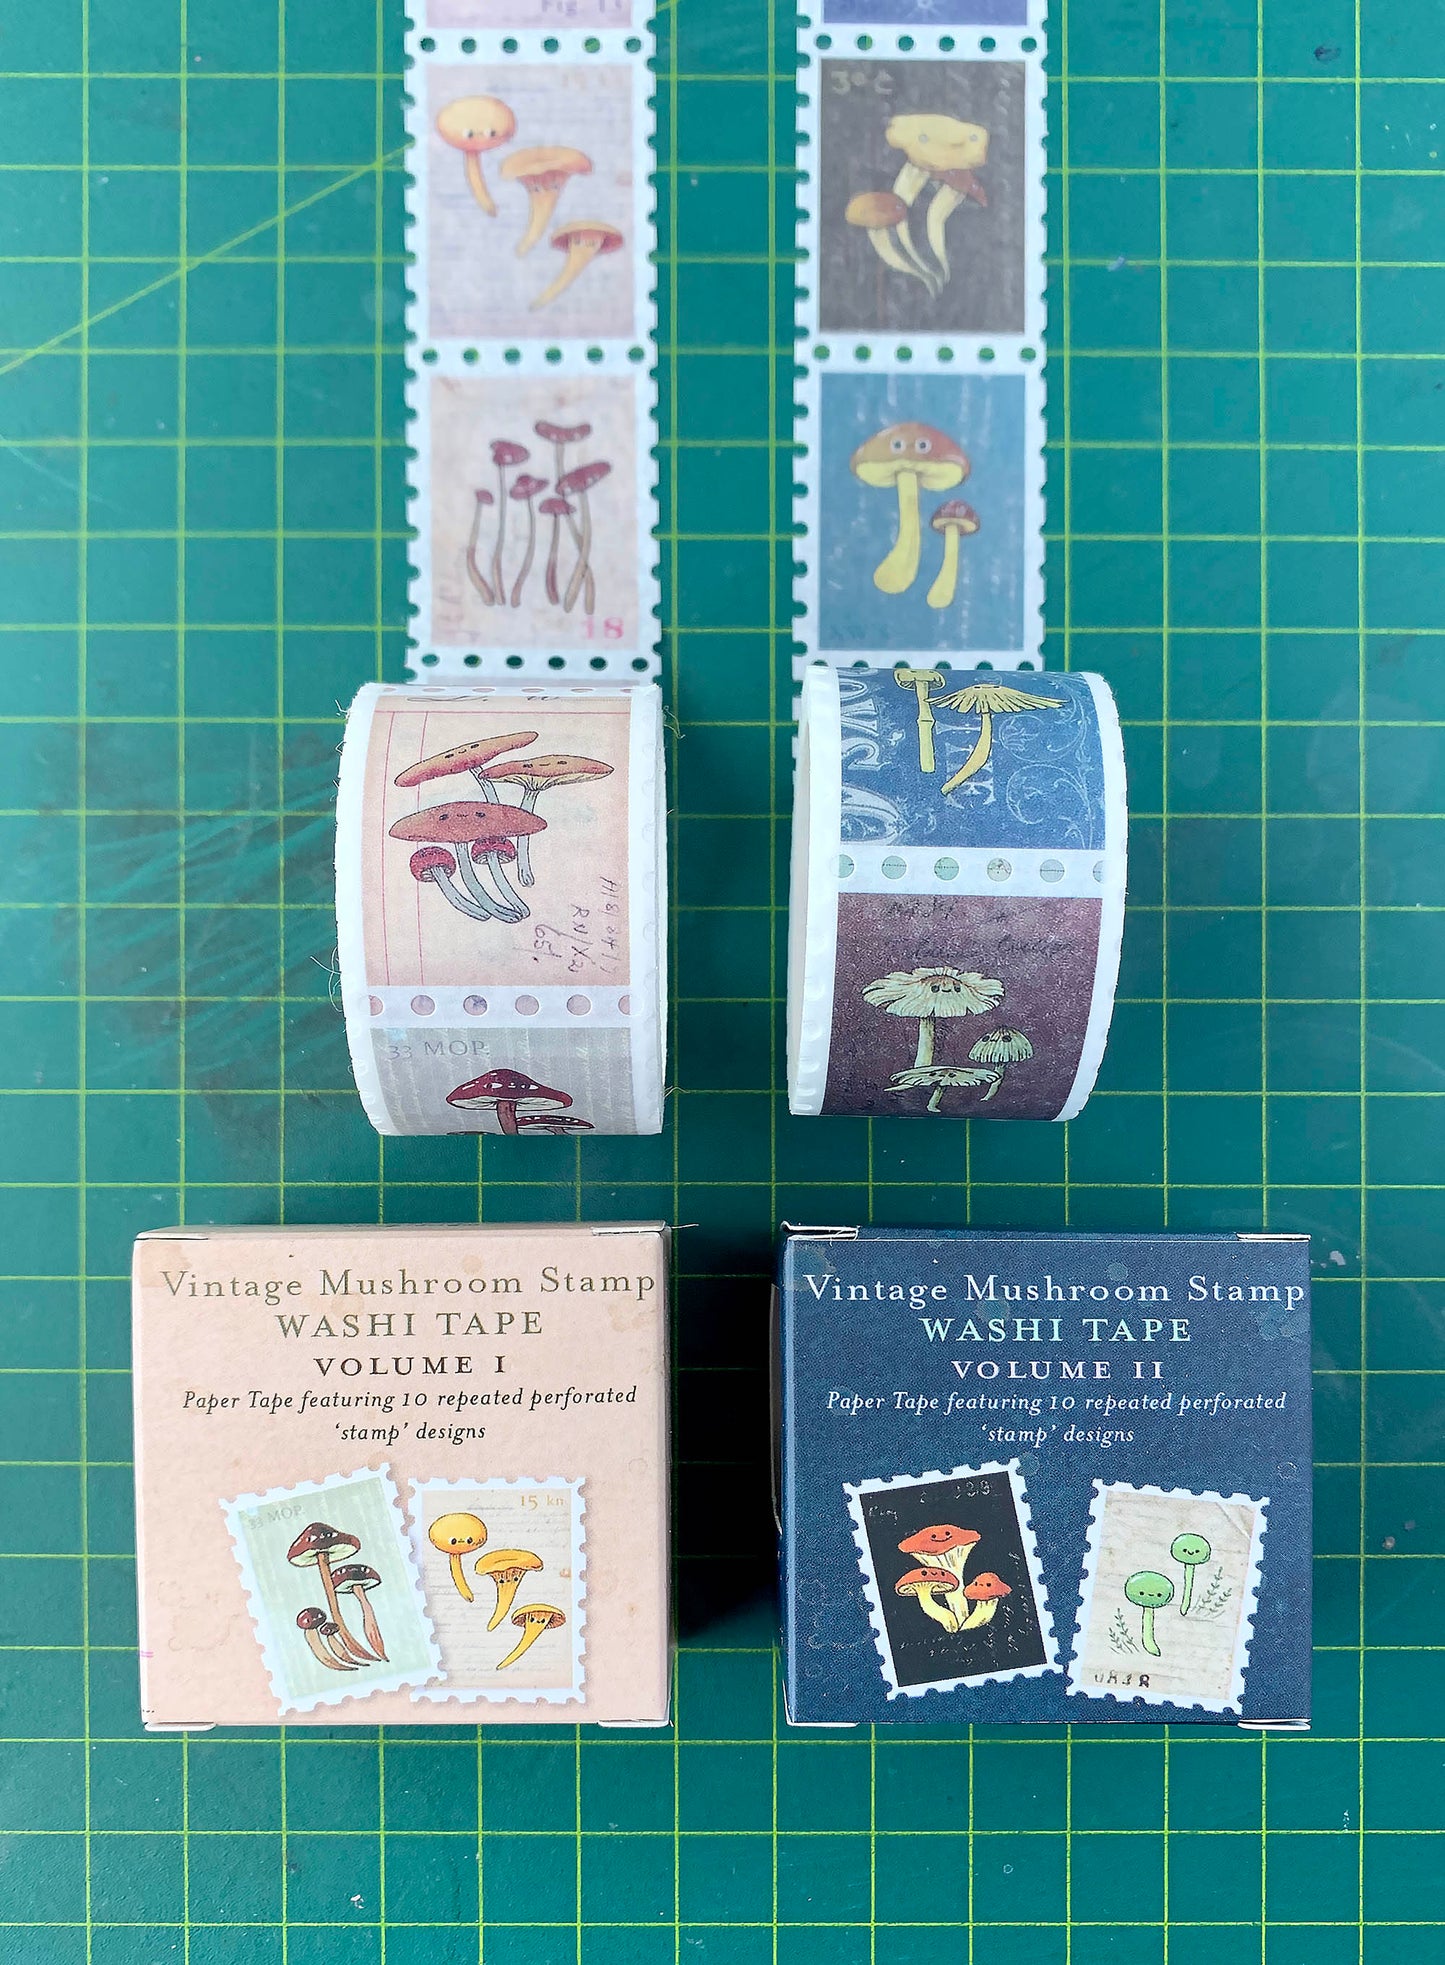 Vintage Mushroom Vol I & II - Stamp Washi Tape - 2 PACK